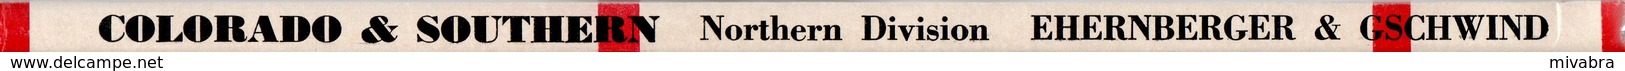 COLORADO & SOUTHERN NORTHERN DIVISION - J. L. EHERNBERGER & G. GSCHWIND - (LOCOMOTIVES EISENBAHNEN CHEMIN DE FER VAPEUR) - Transports